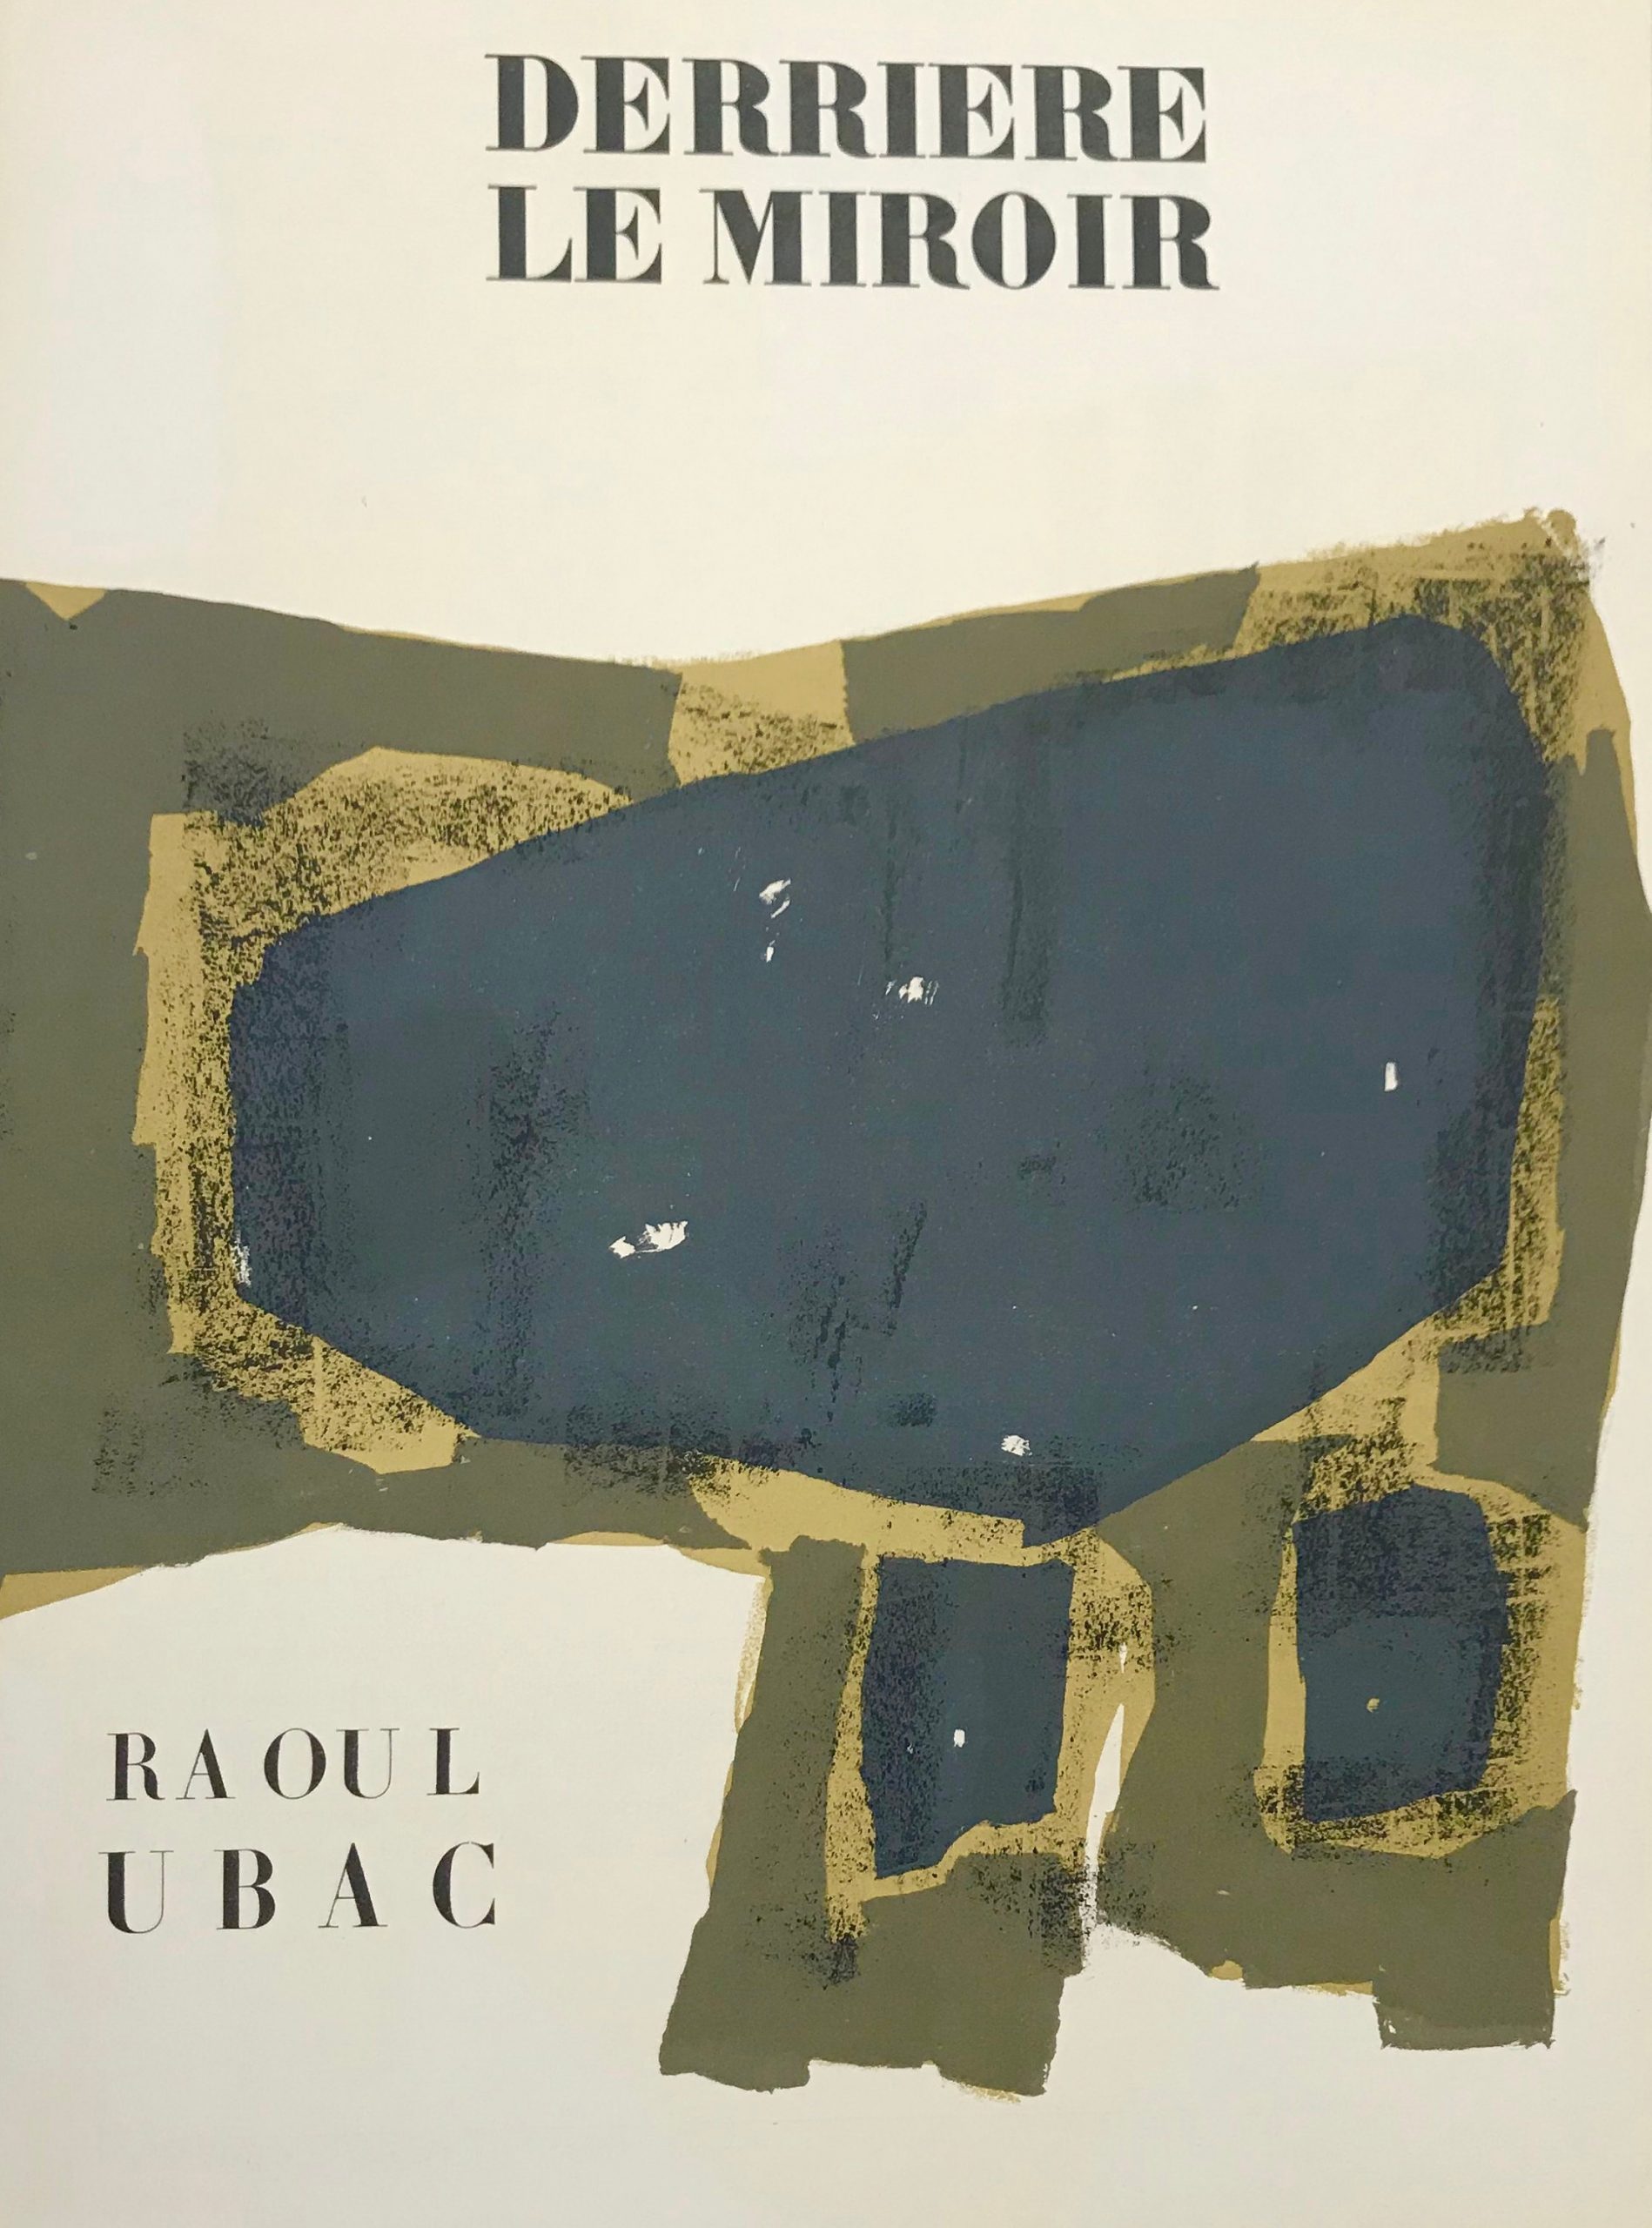 Book Derriere le Miroir 74, Contains 3 Lithographs by Ubac 1955